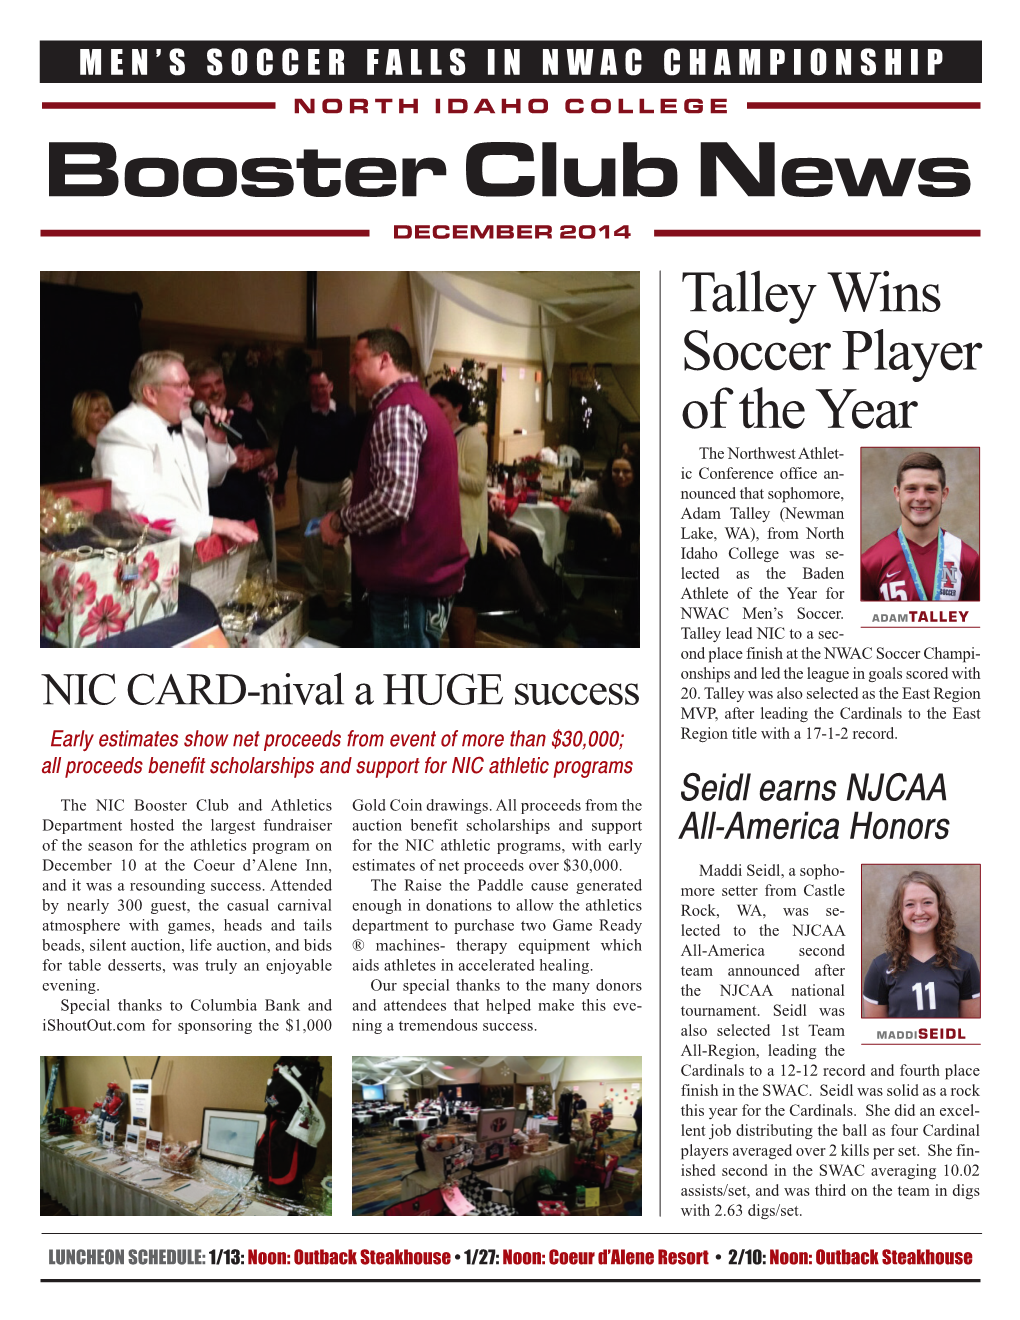 Booster Club News